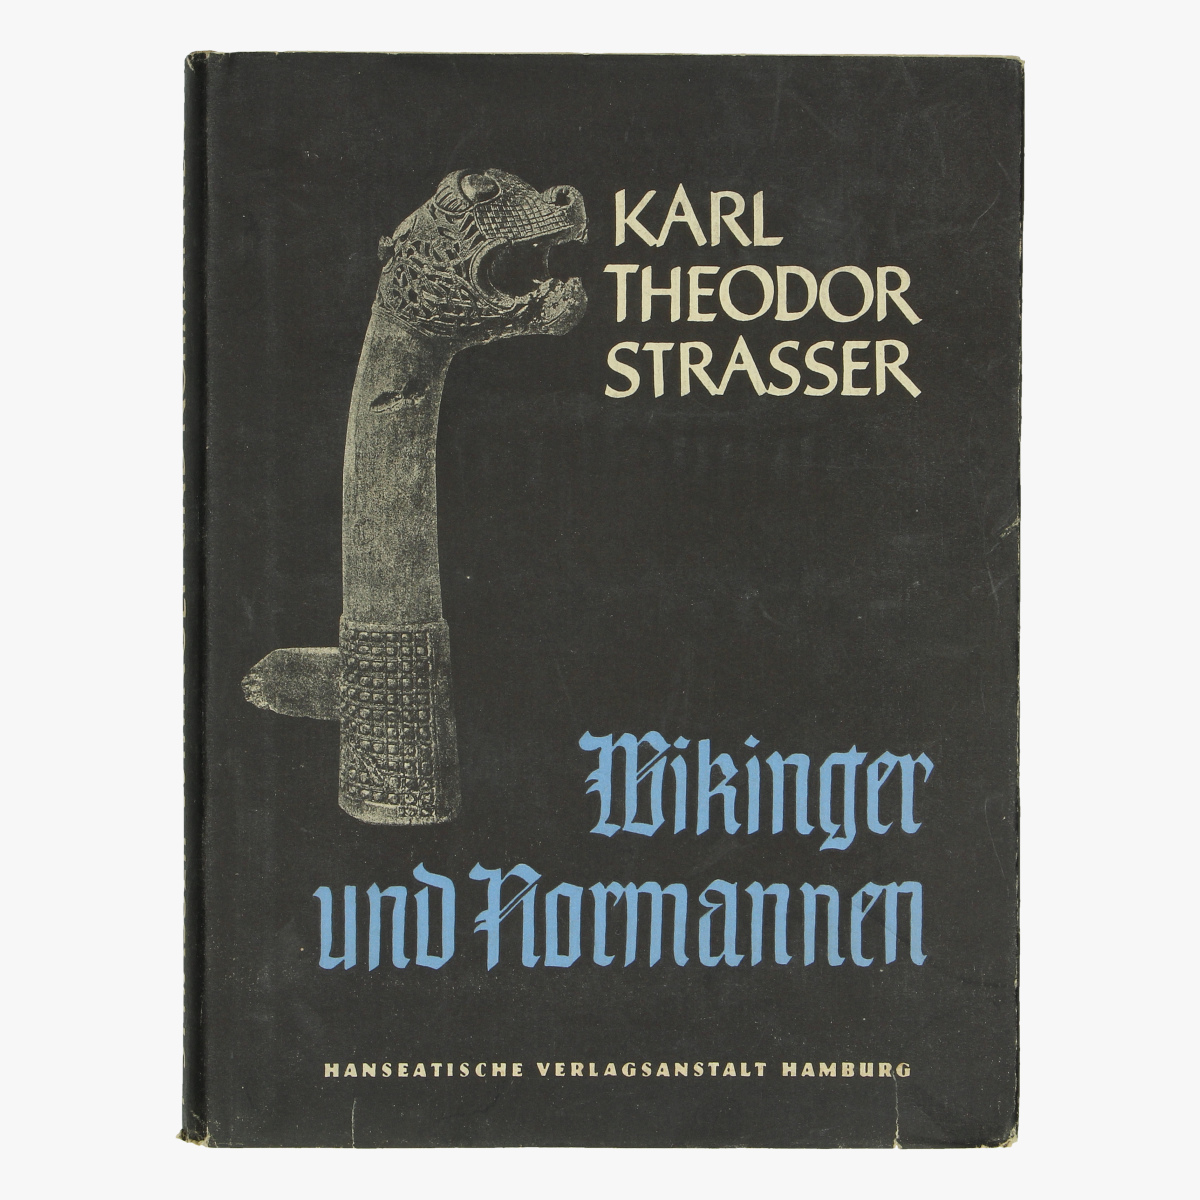 Afbeeldingen van boek karl theodor strasser wikinger und normannen 1943